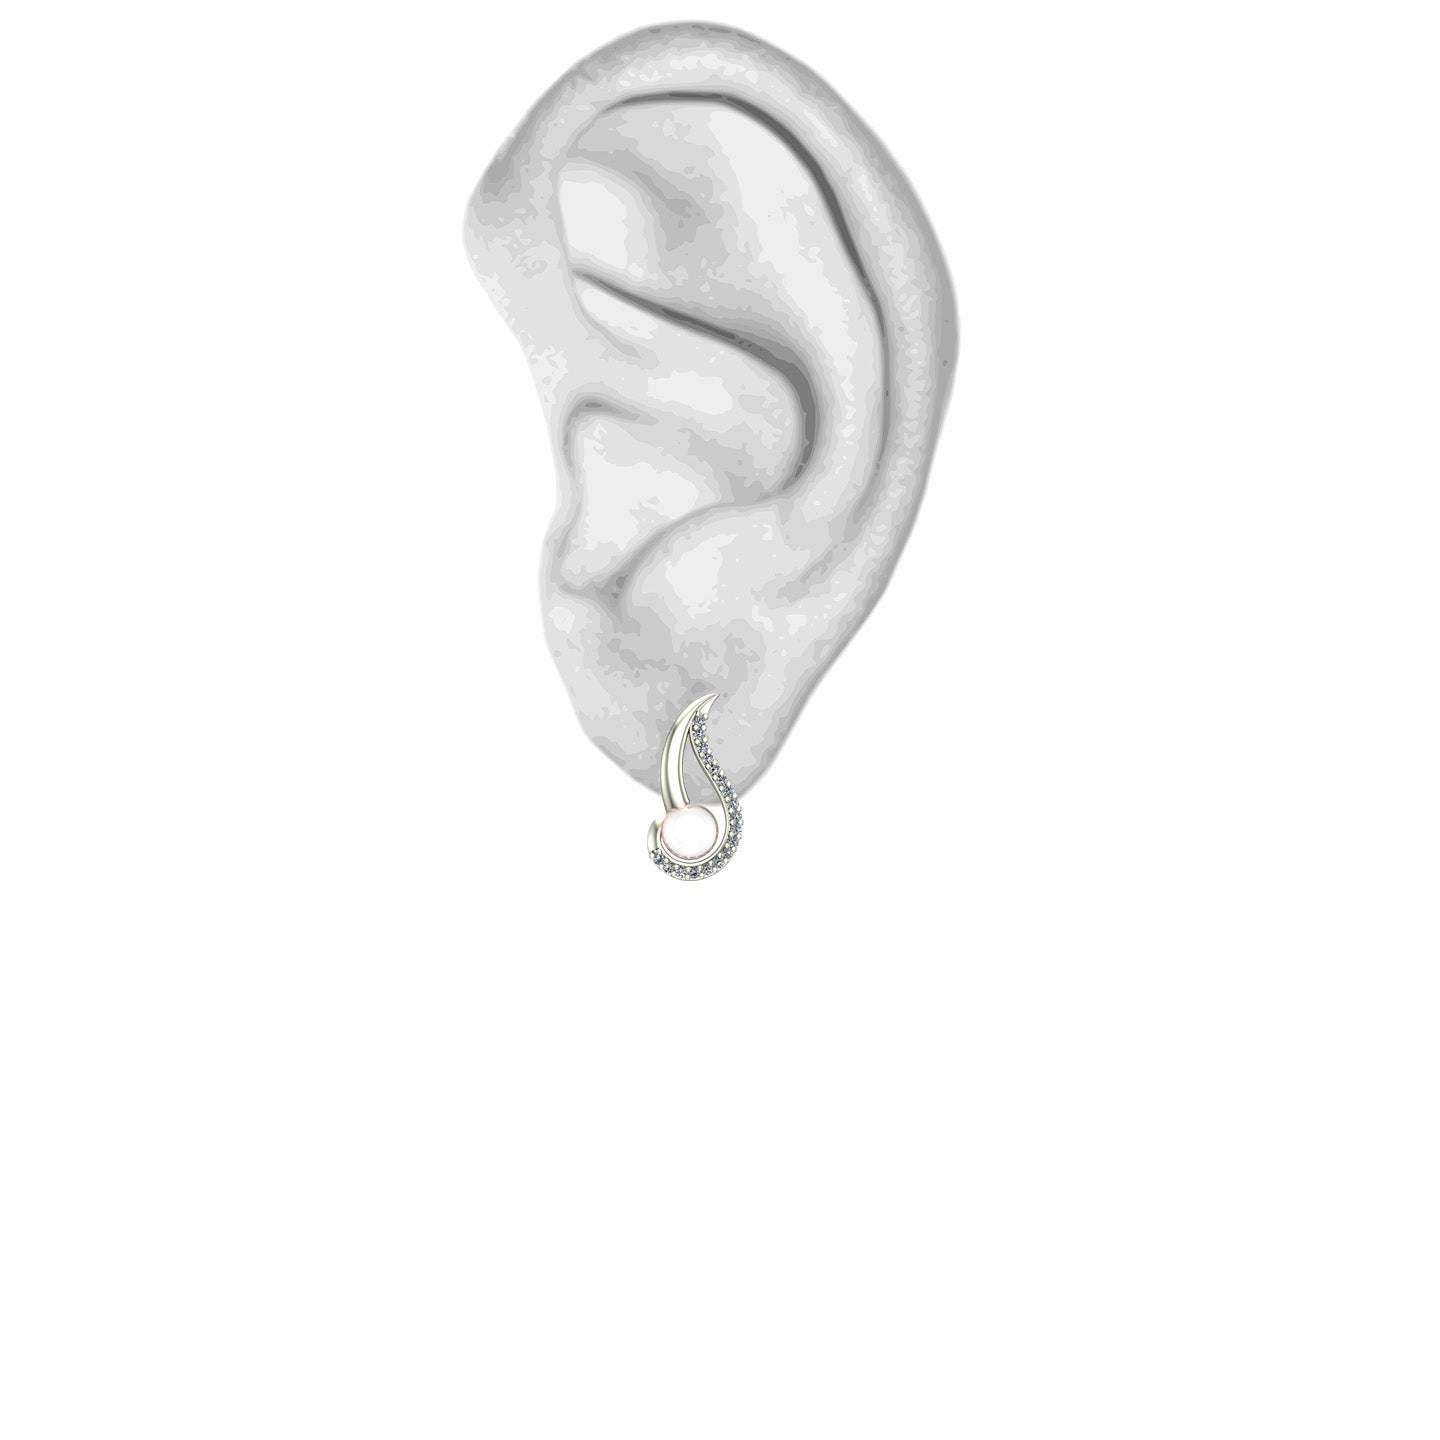 pearl and diamond swirl earrings in 14k white gold - Charles Babb Designs - on ear